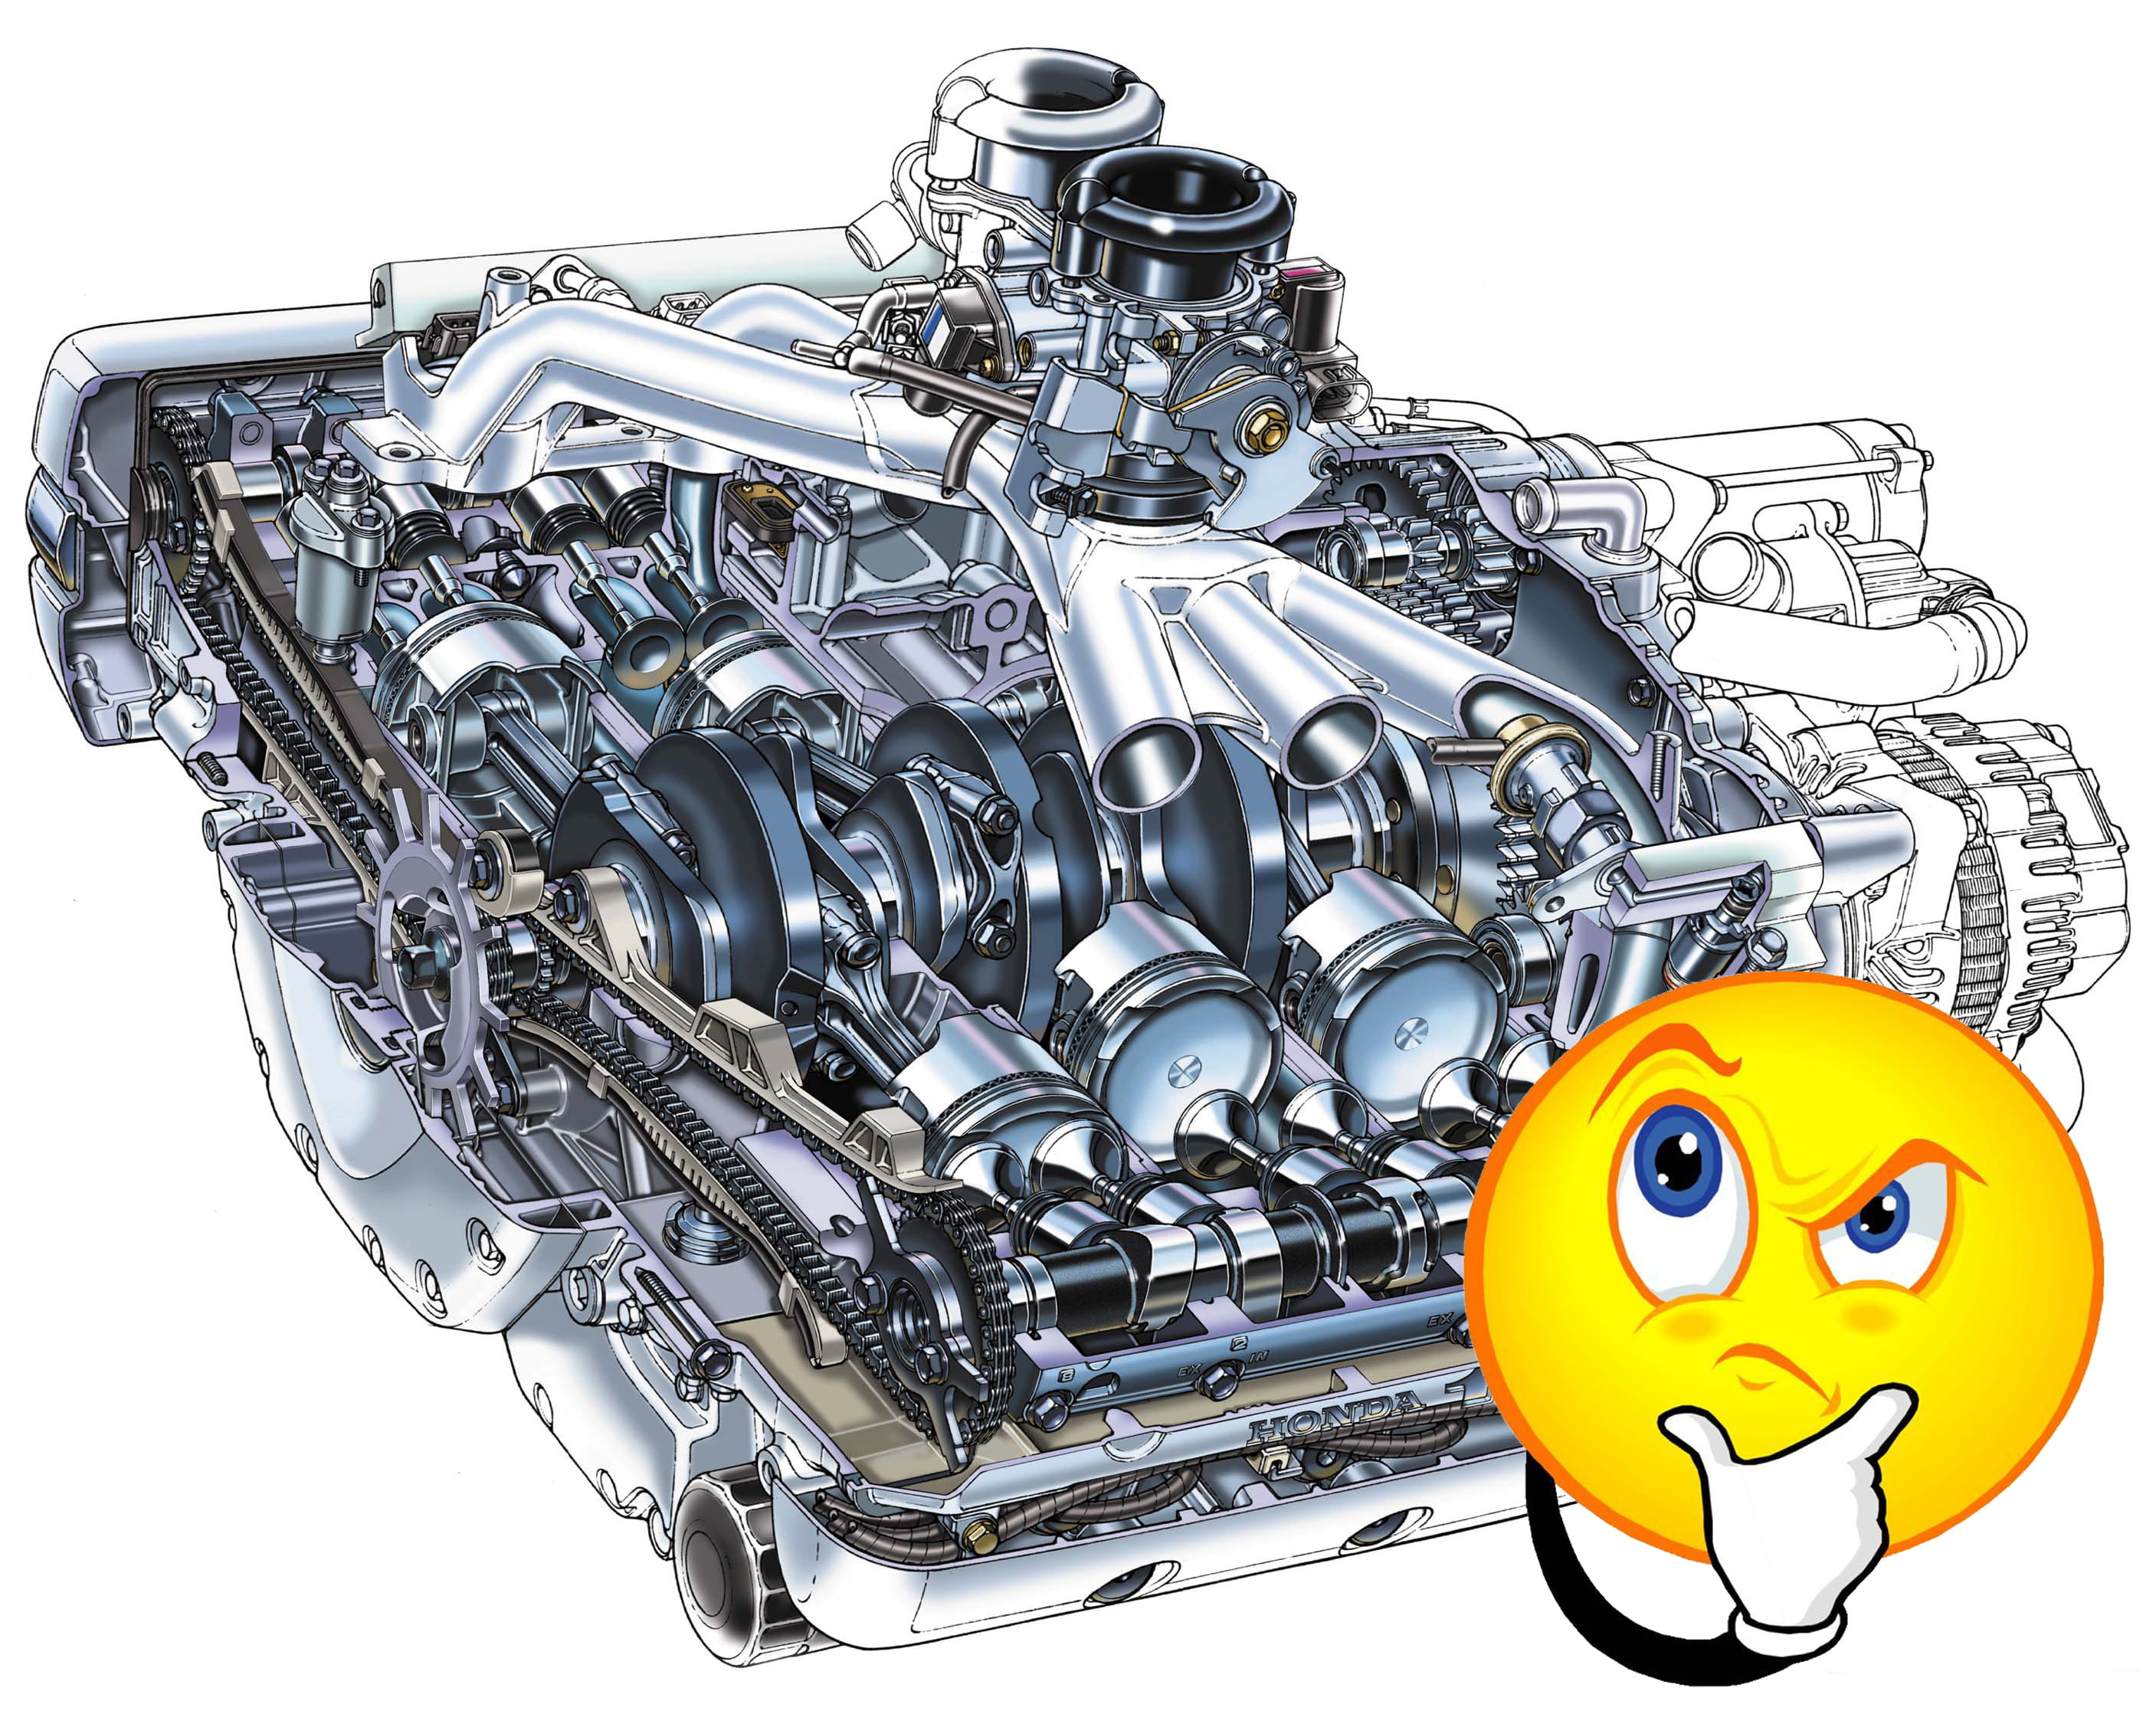 Inside a bike engine - engine thinking 2